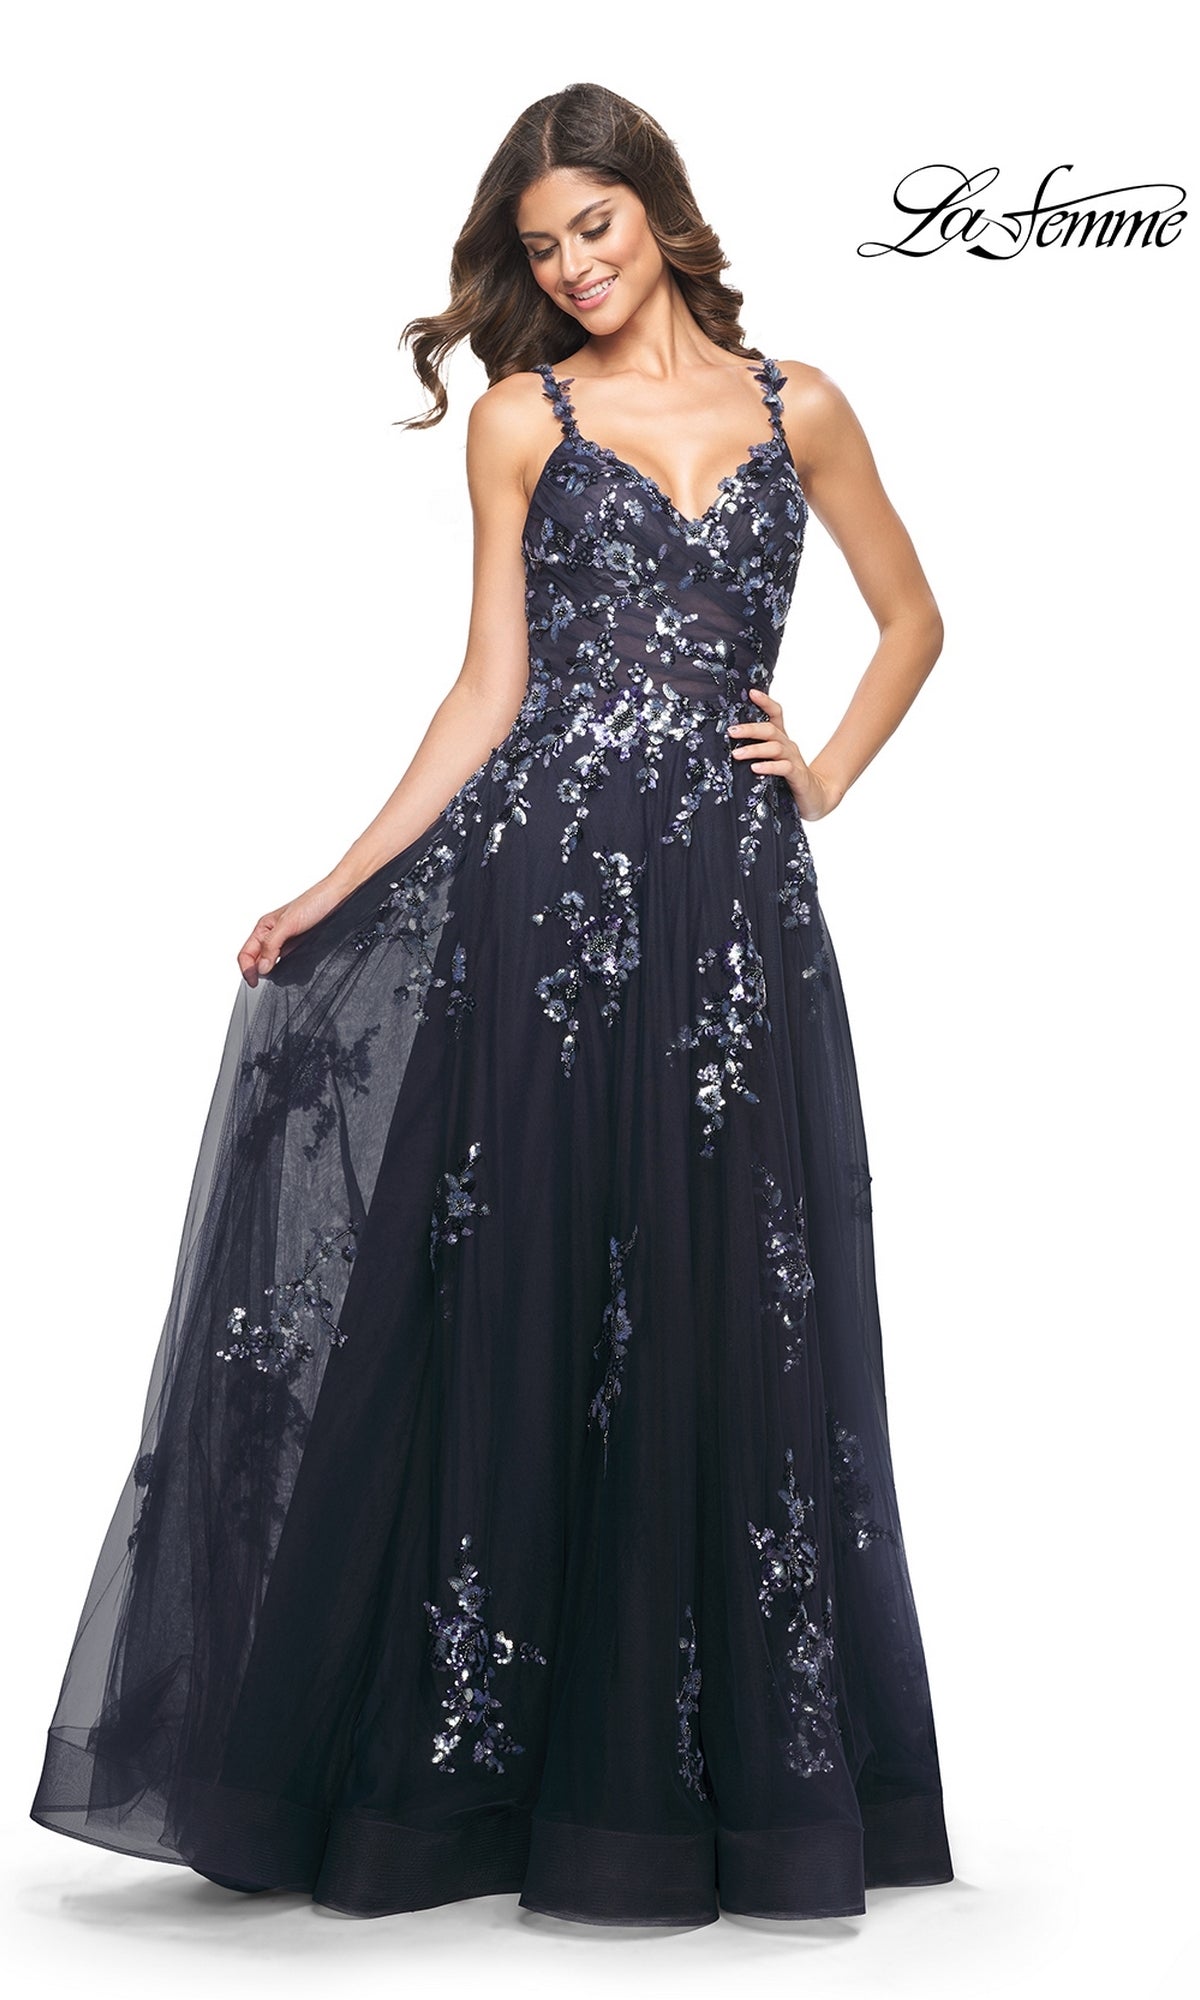  La Femme 31936 Formal Prom Dress